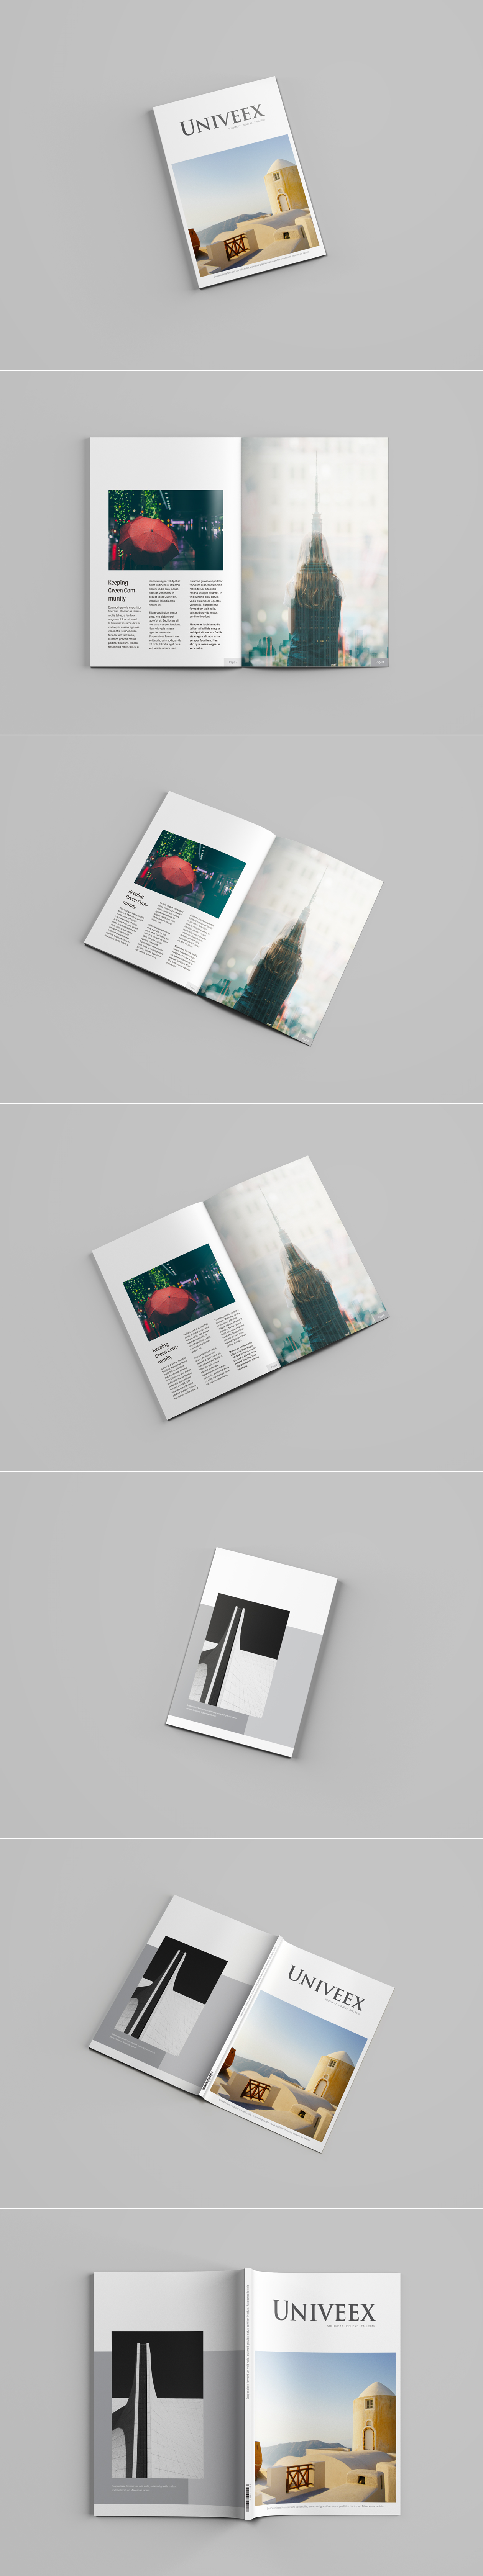 A4精装杂志封面&内页排版印刷效果图样机 A4 Magazine Mockup插图